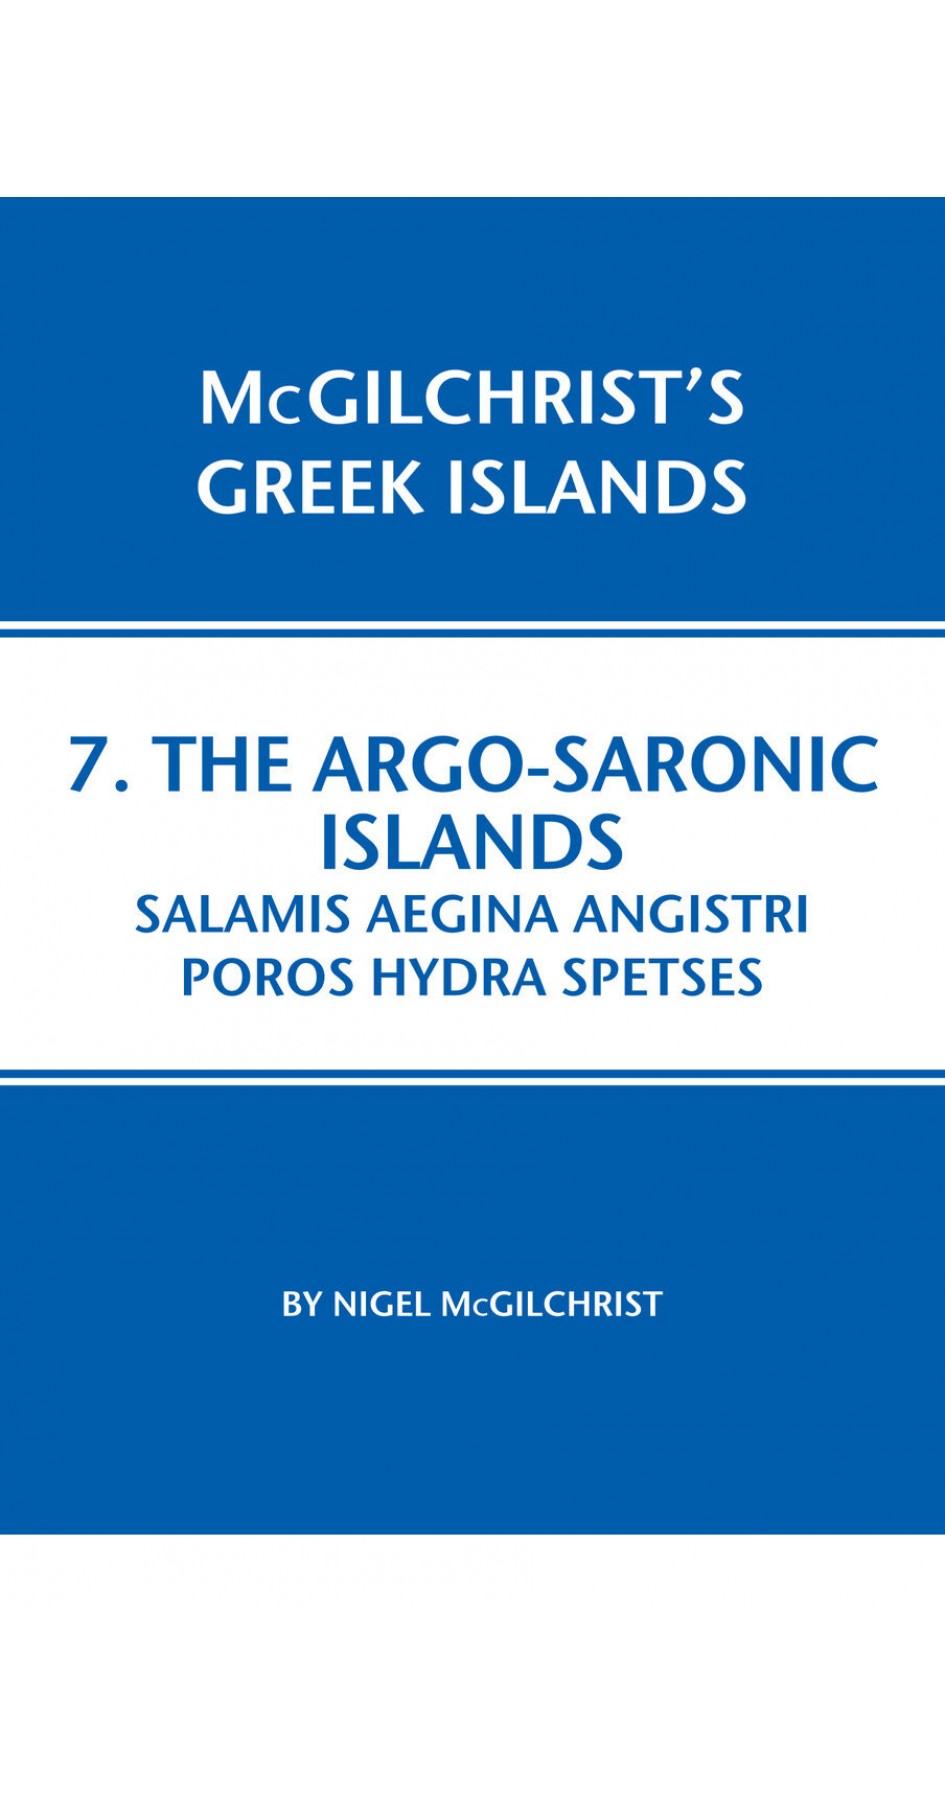 07. The Argo-Saronic islands: Salamis, Aegina, Angistri, Poros, Hydra, Spetses - McGilchrist’s Greek Islands